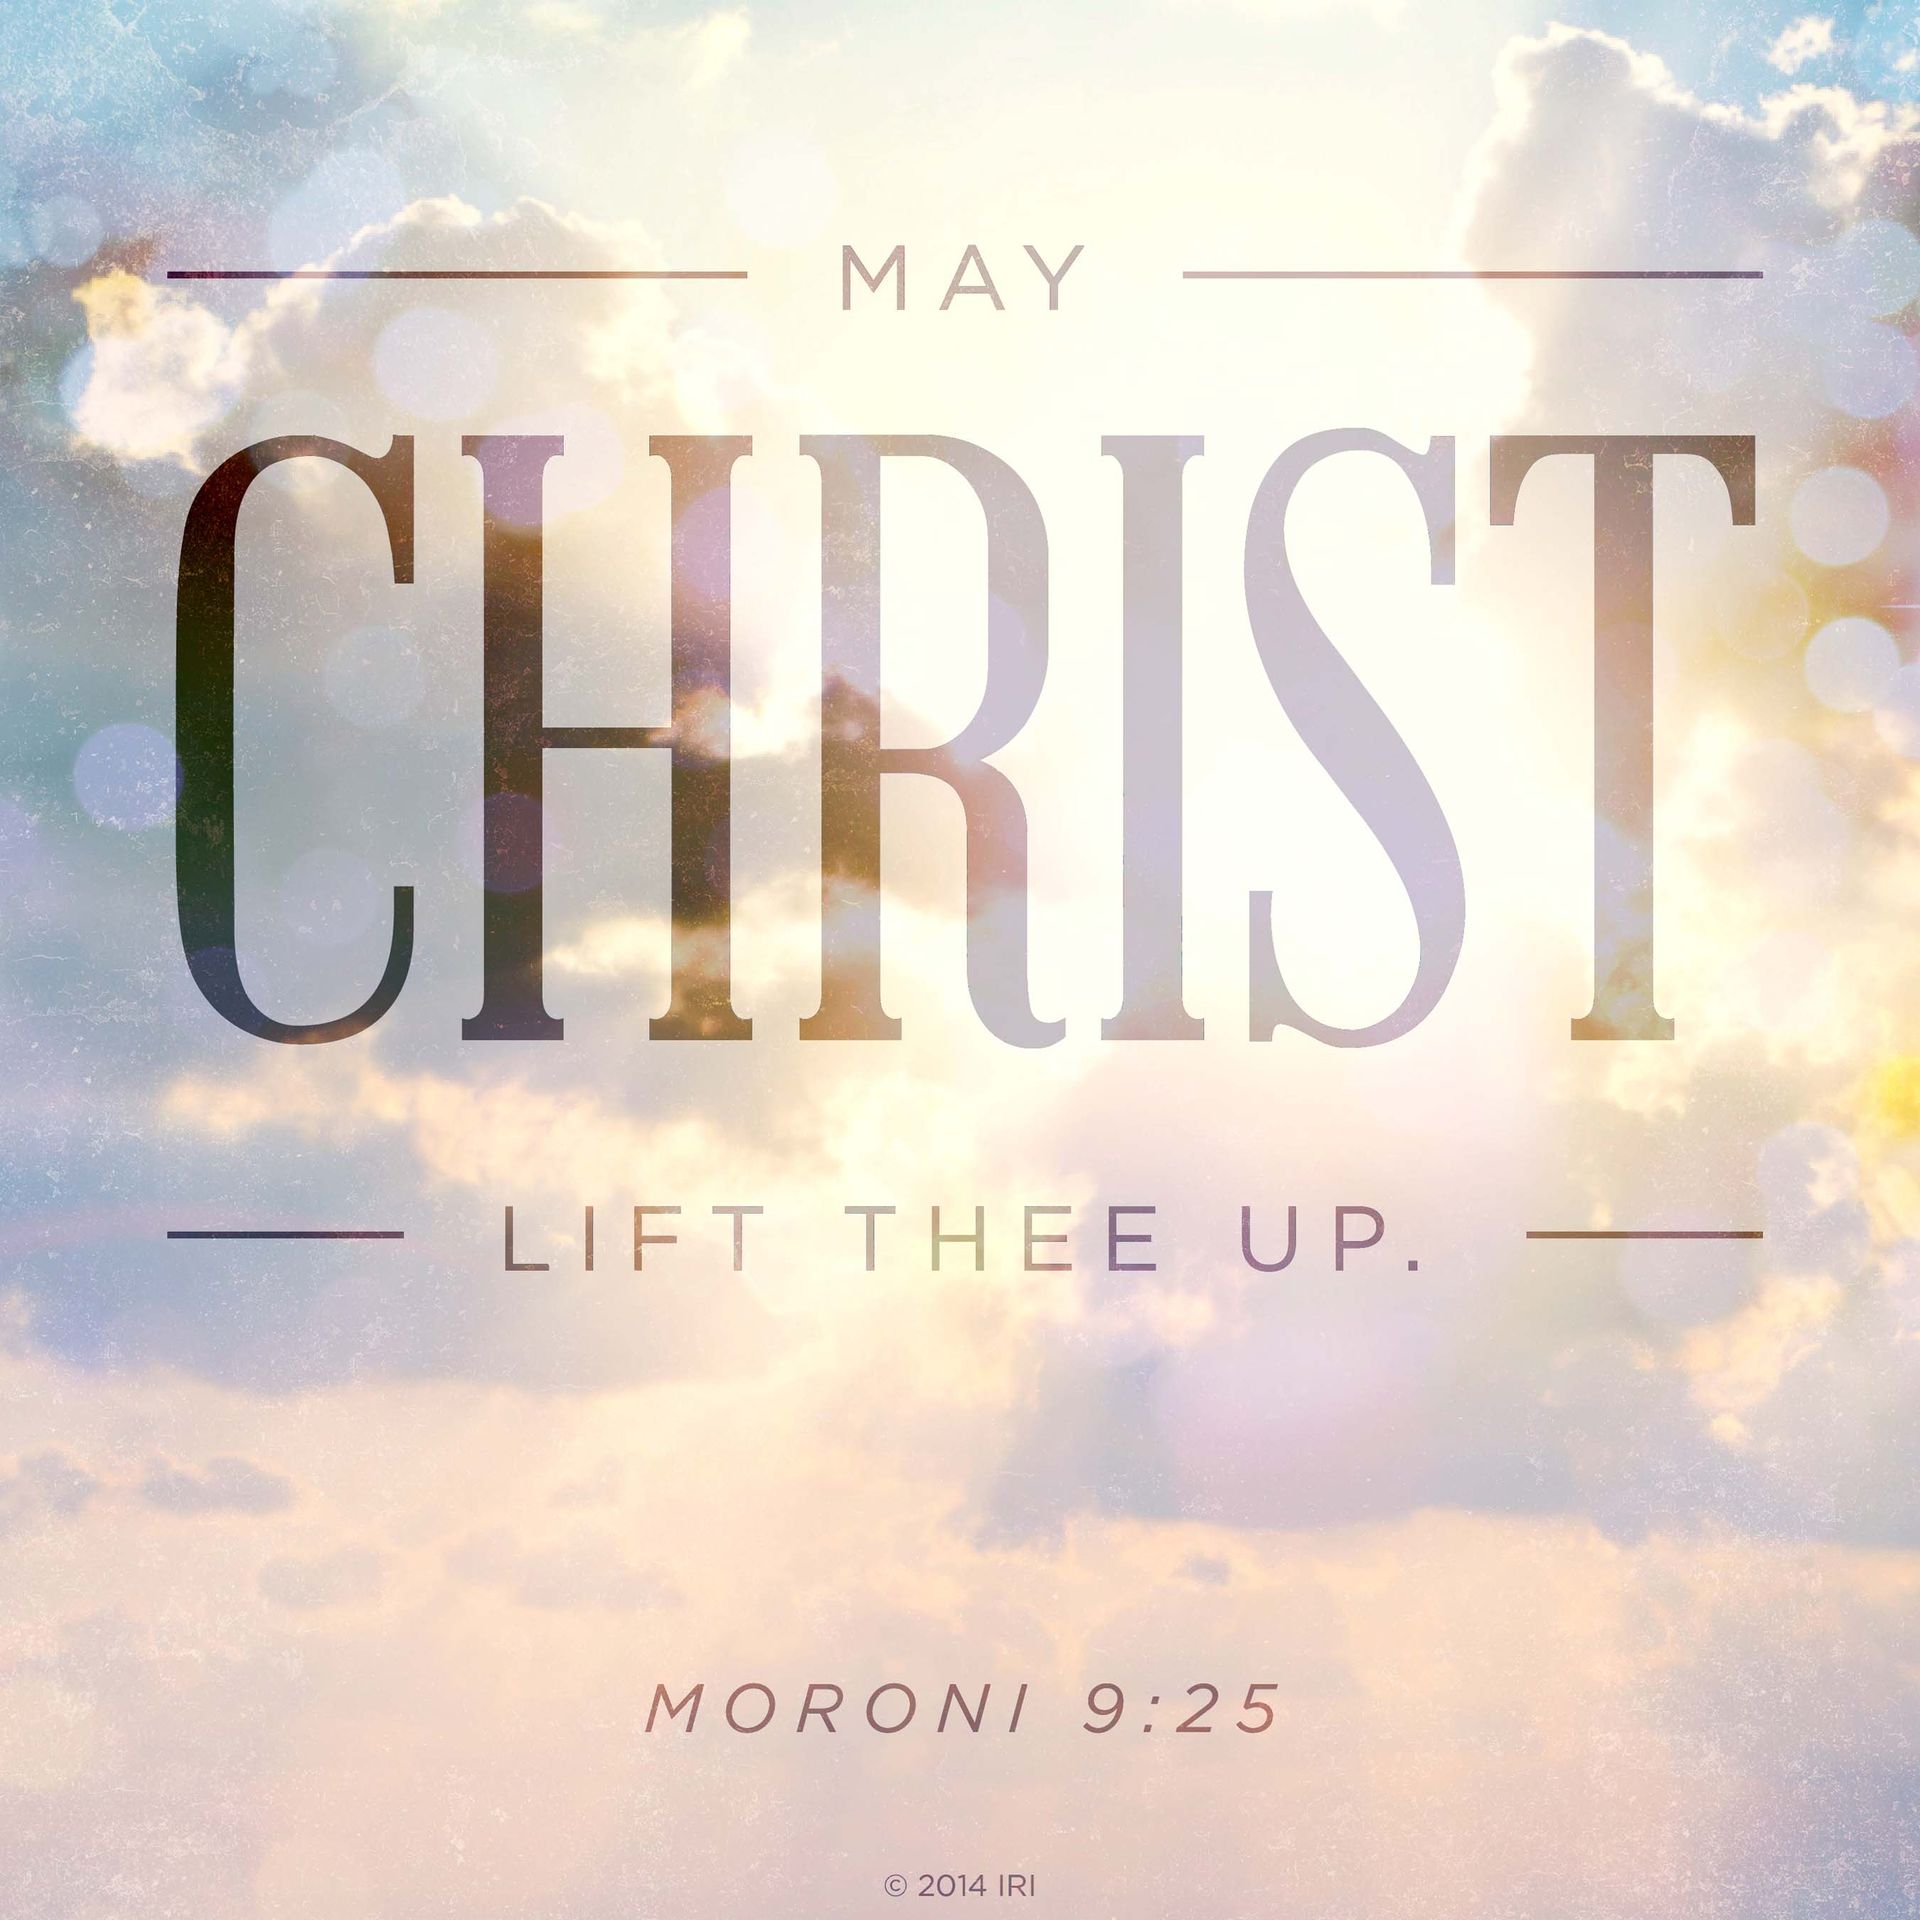 “May Christ lift thee up.”—Moroni 9:25